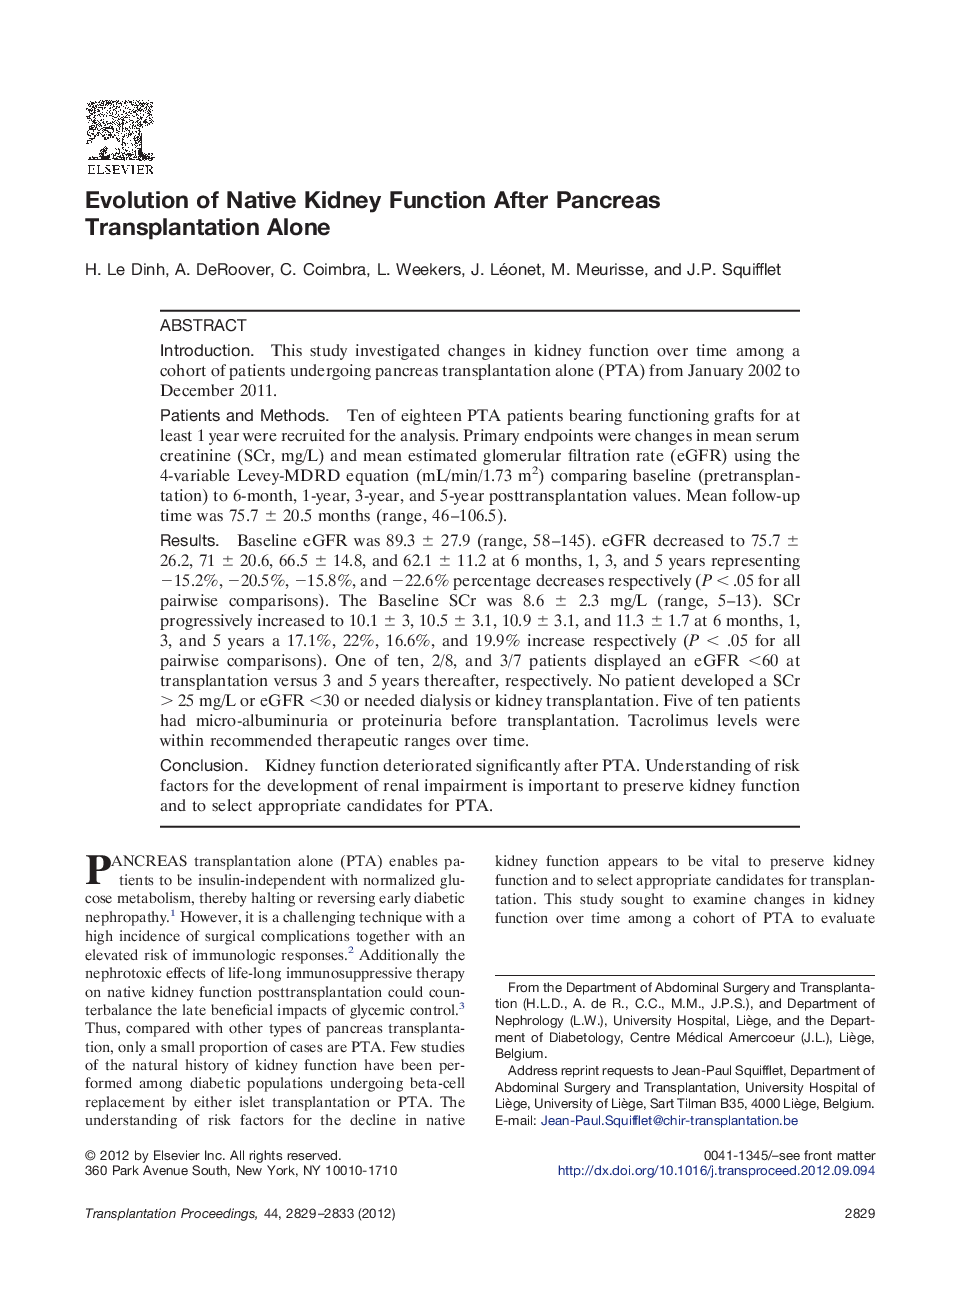 Evolution of Native Kidney Function After Pancreas Transplantation Alone